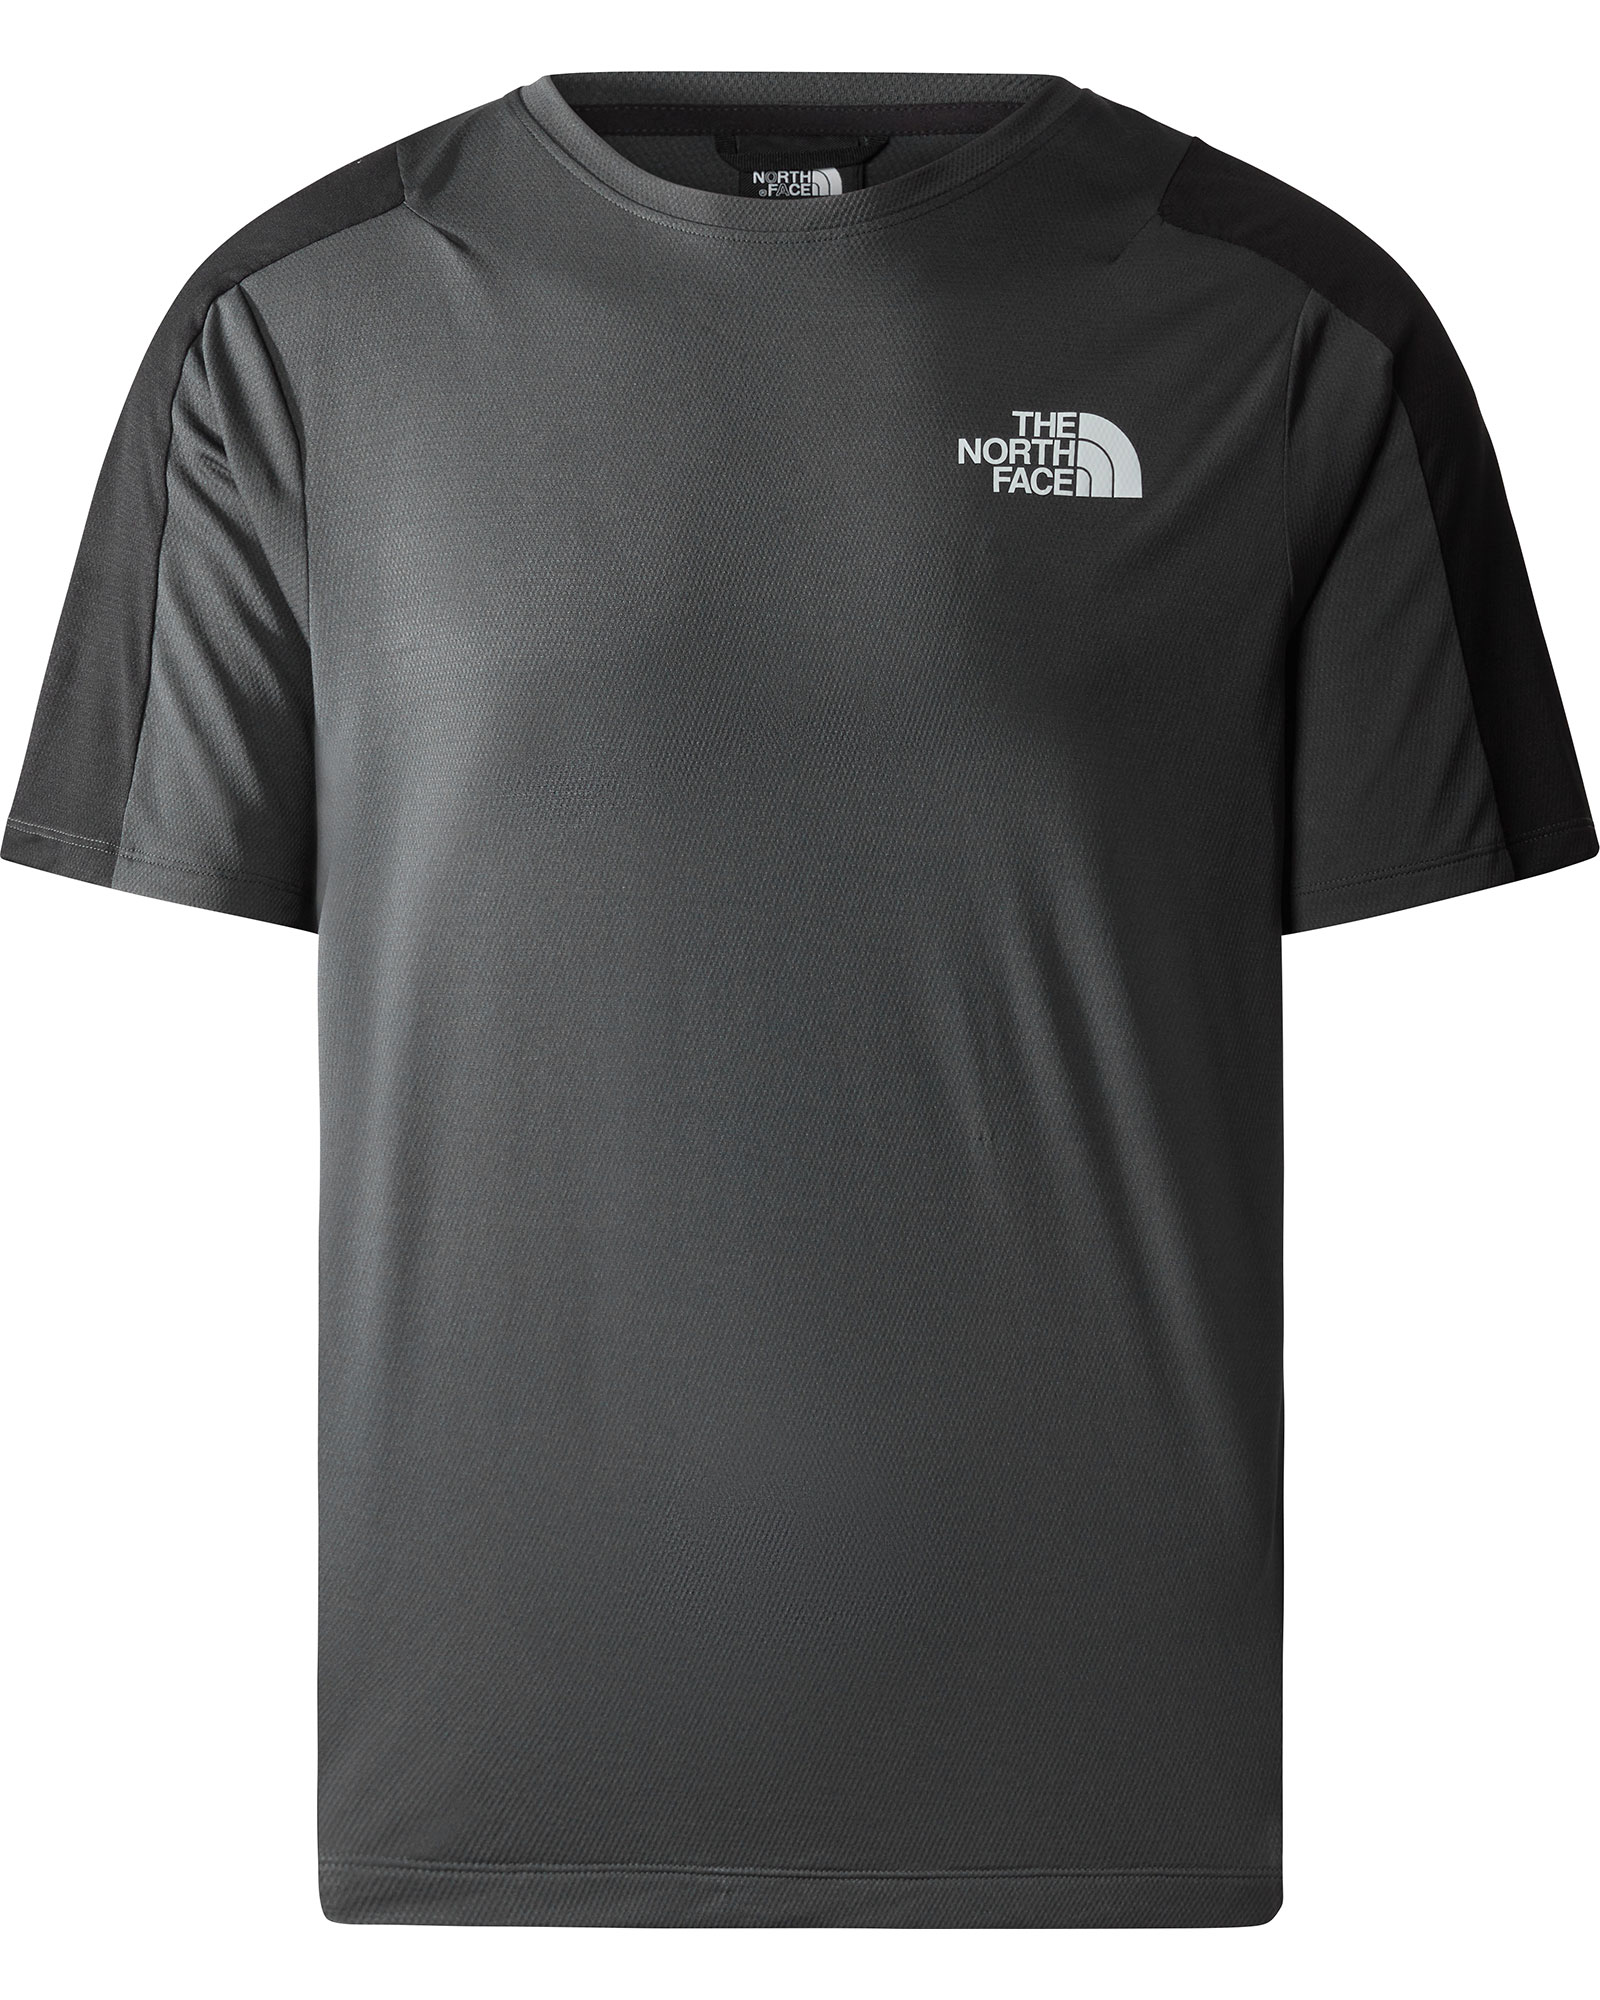 The North Face Men’s MA T Shirt - Asphalt Grey-TNF Black S